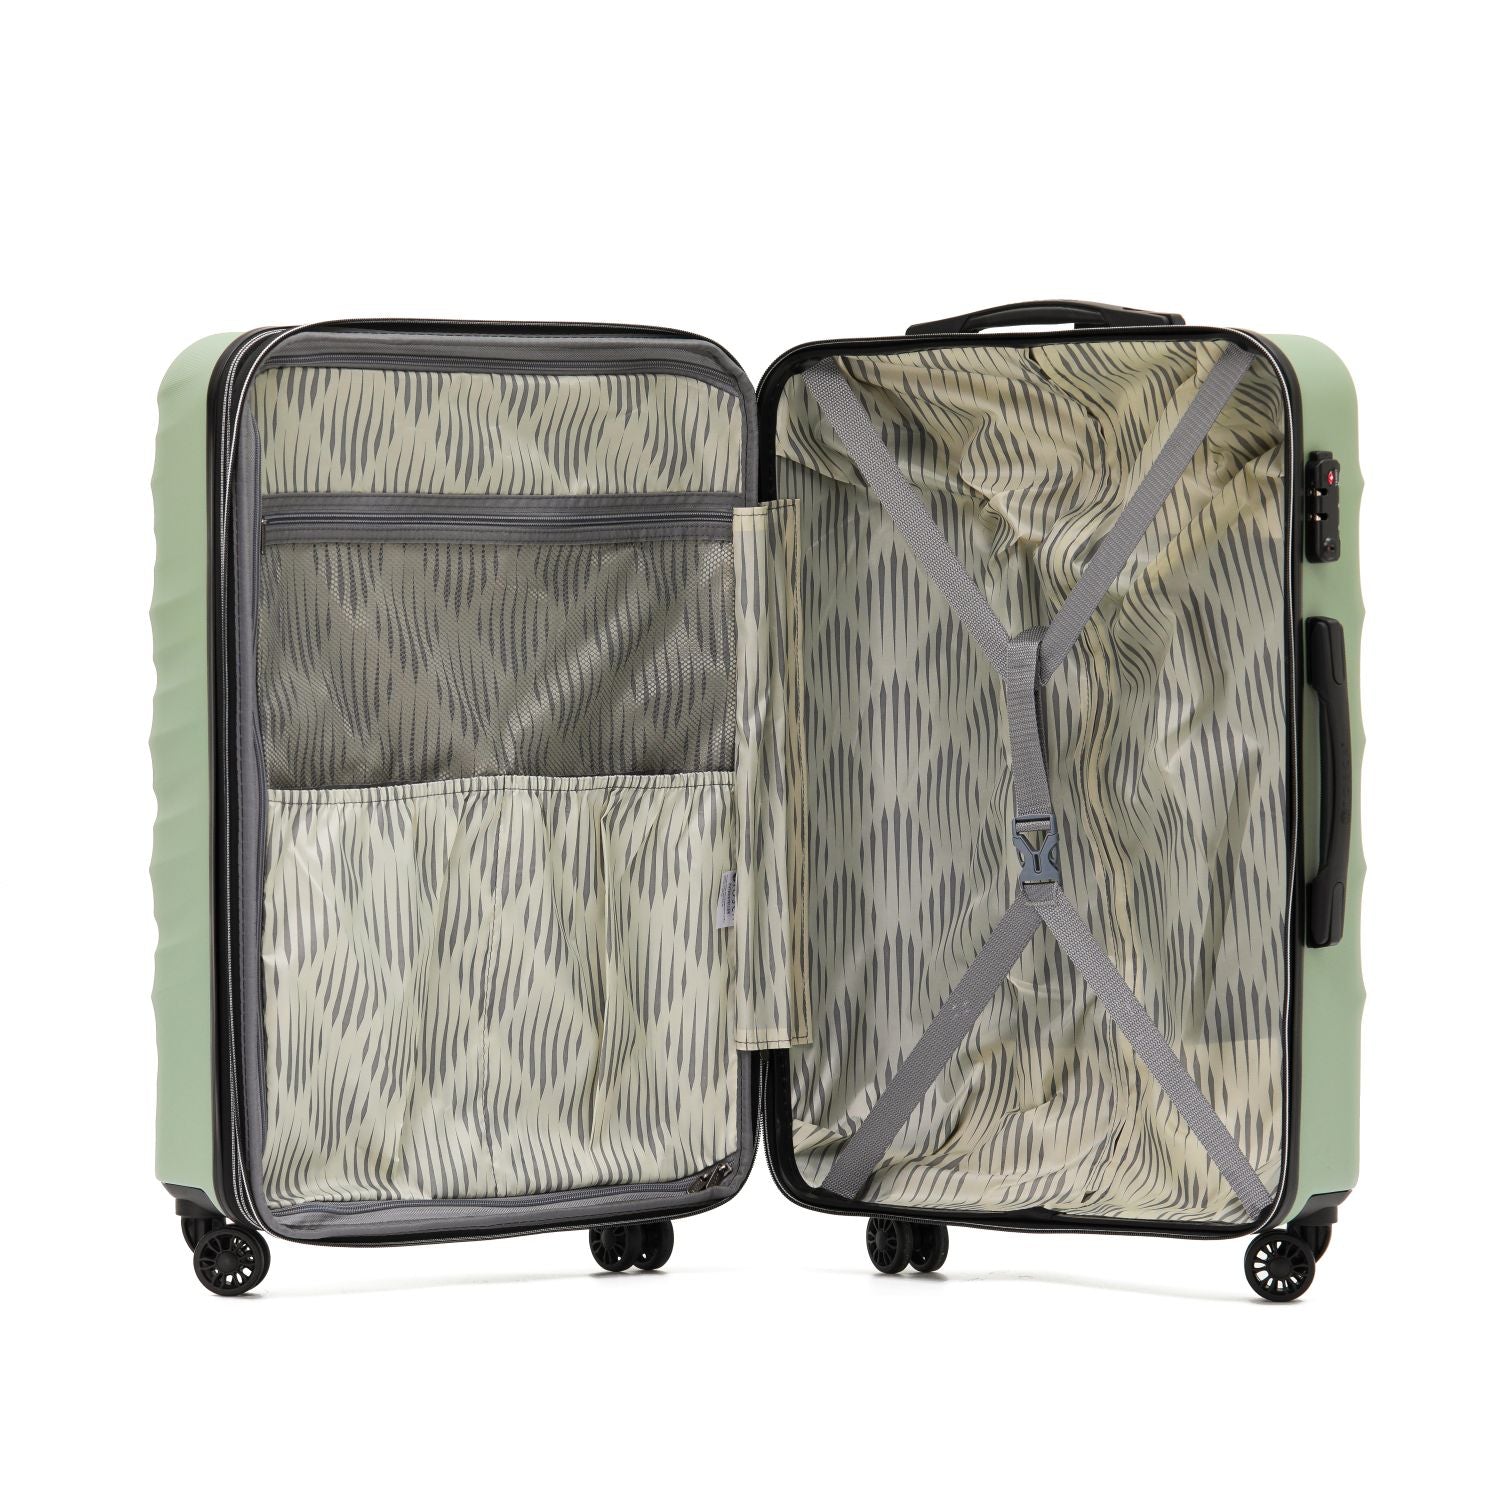 Tosca - Intersteller set of 3 suitcases - Oil Green-3